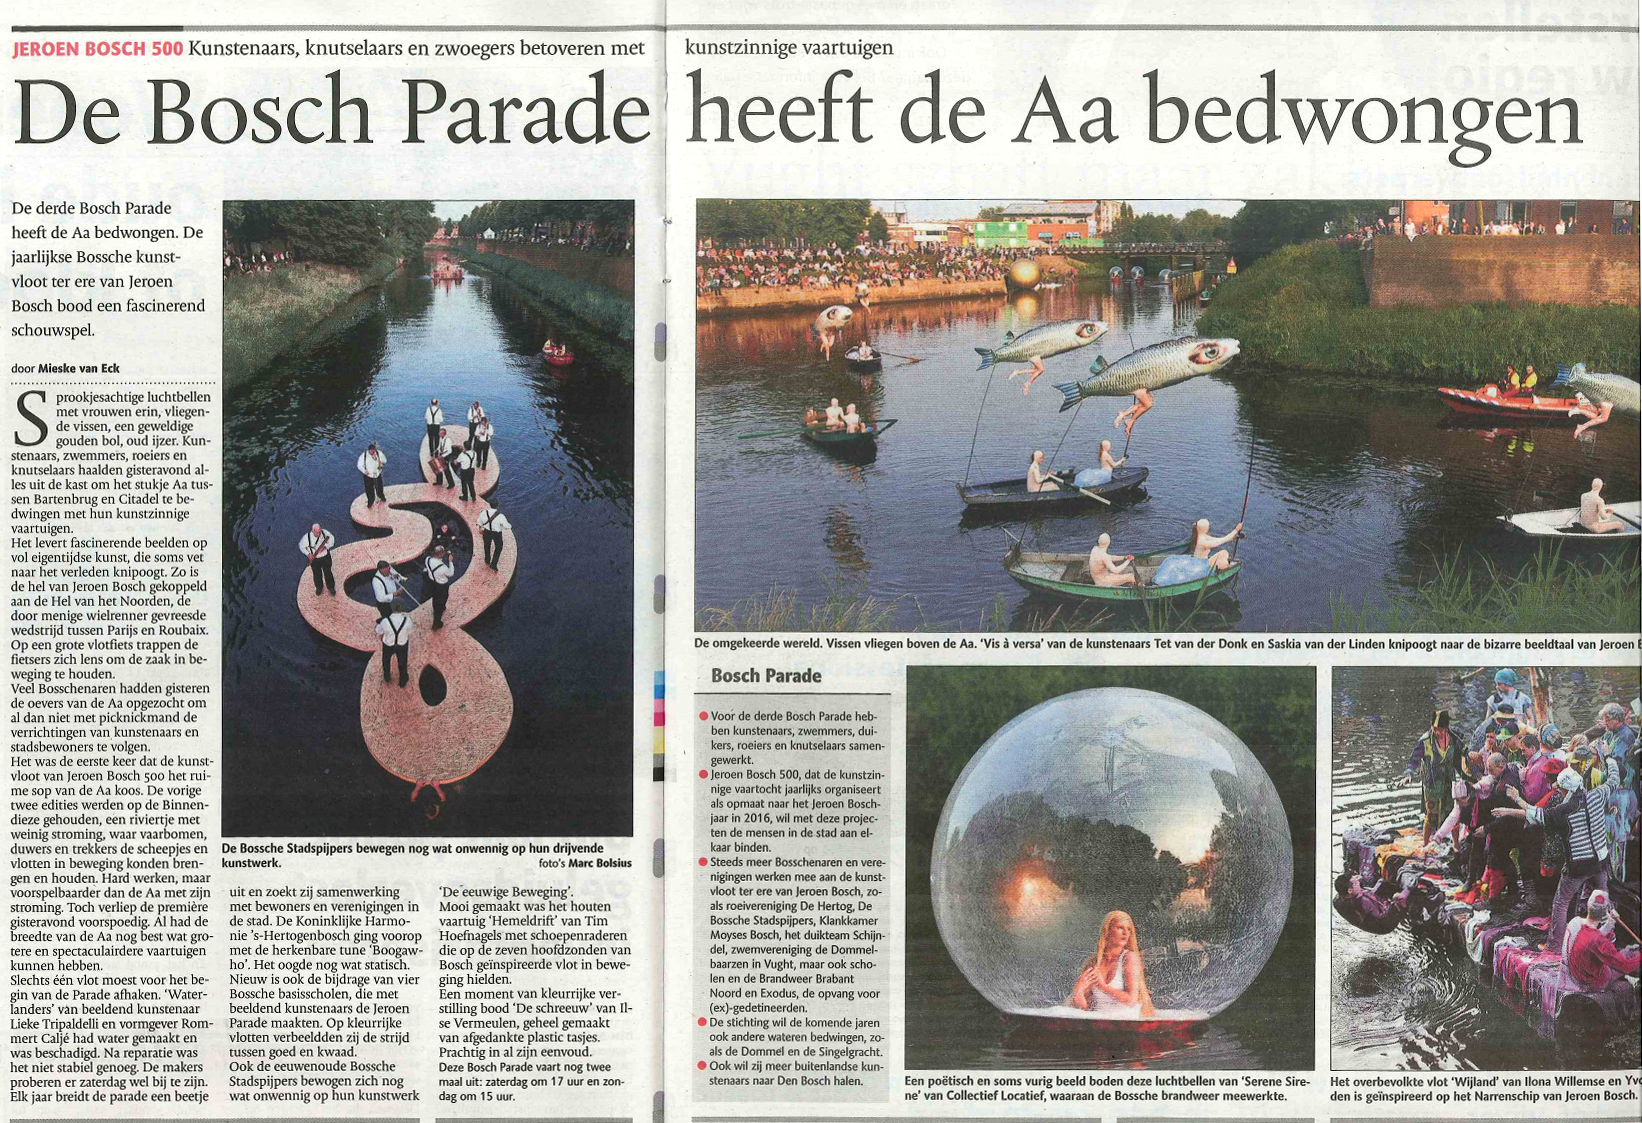 Vis a versa, Brabants Dagblad juni 2012